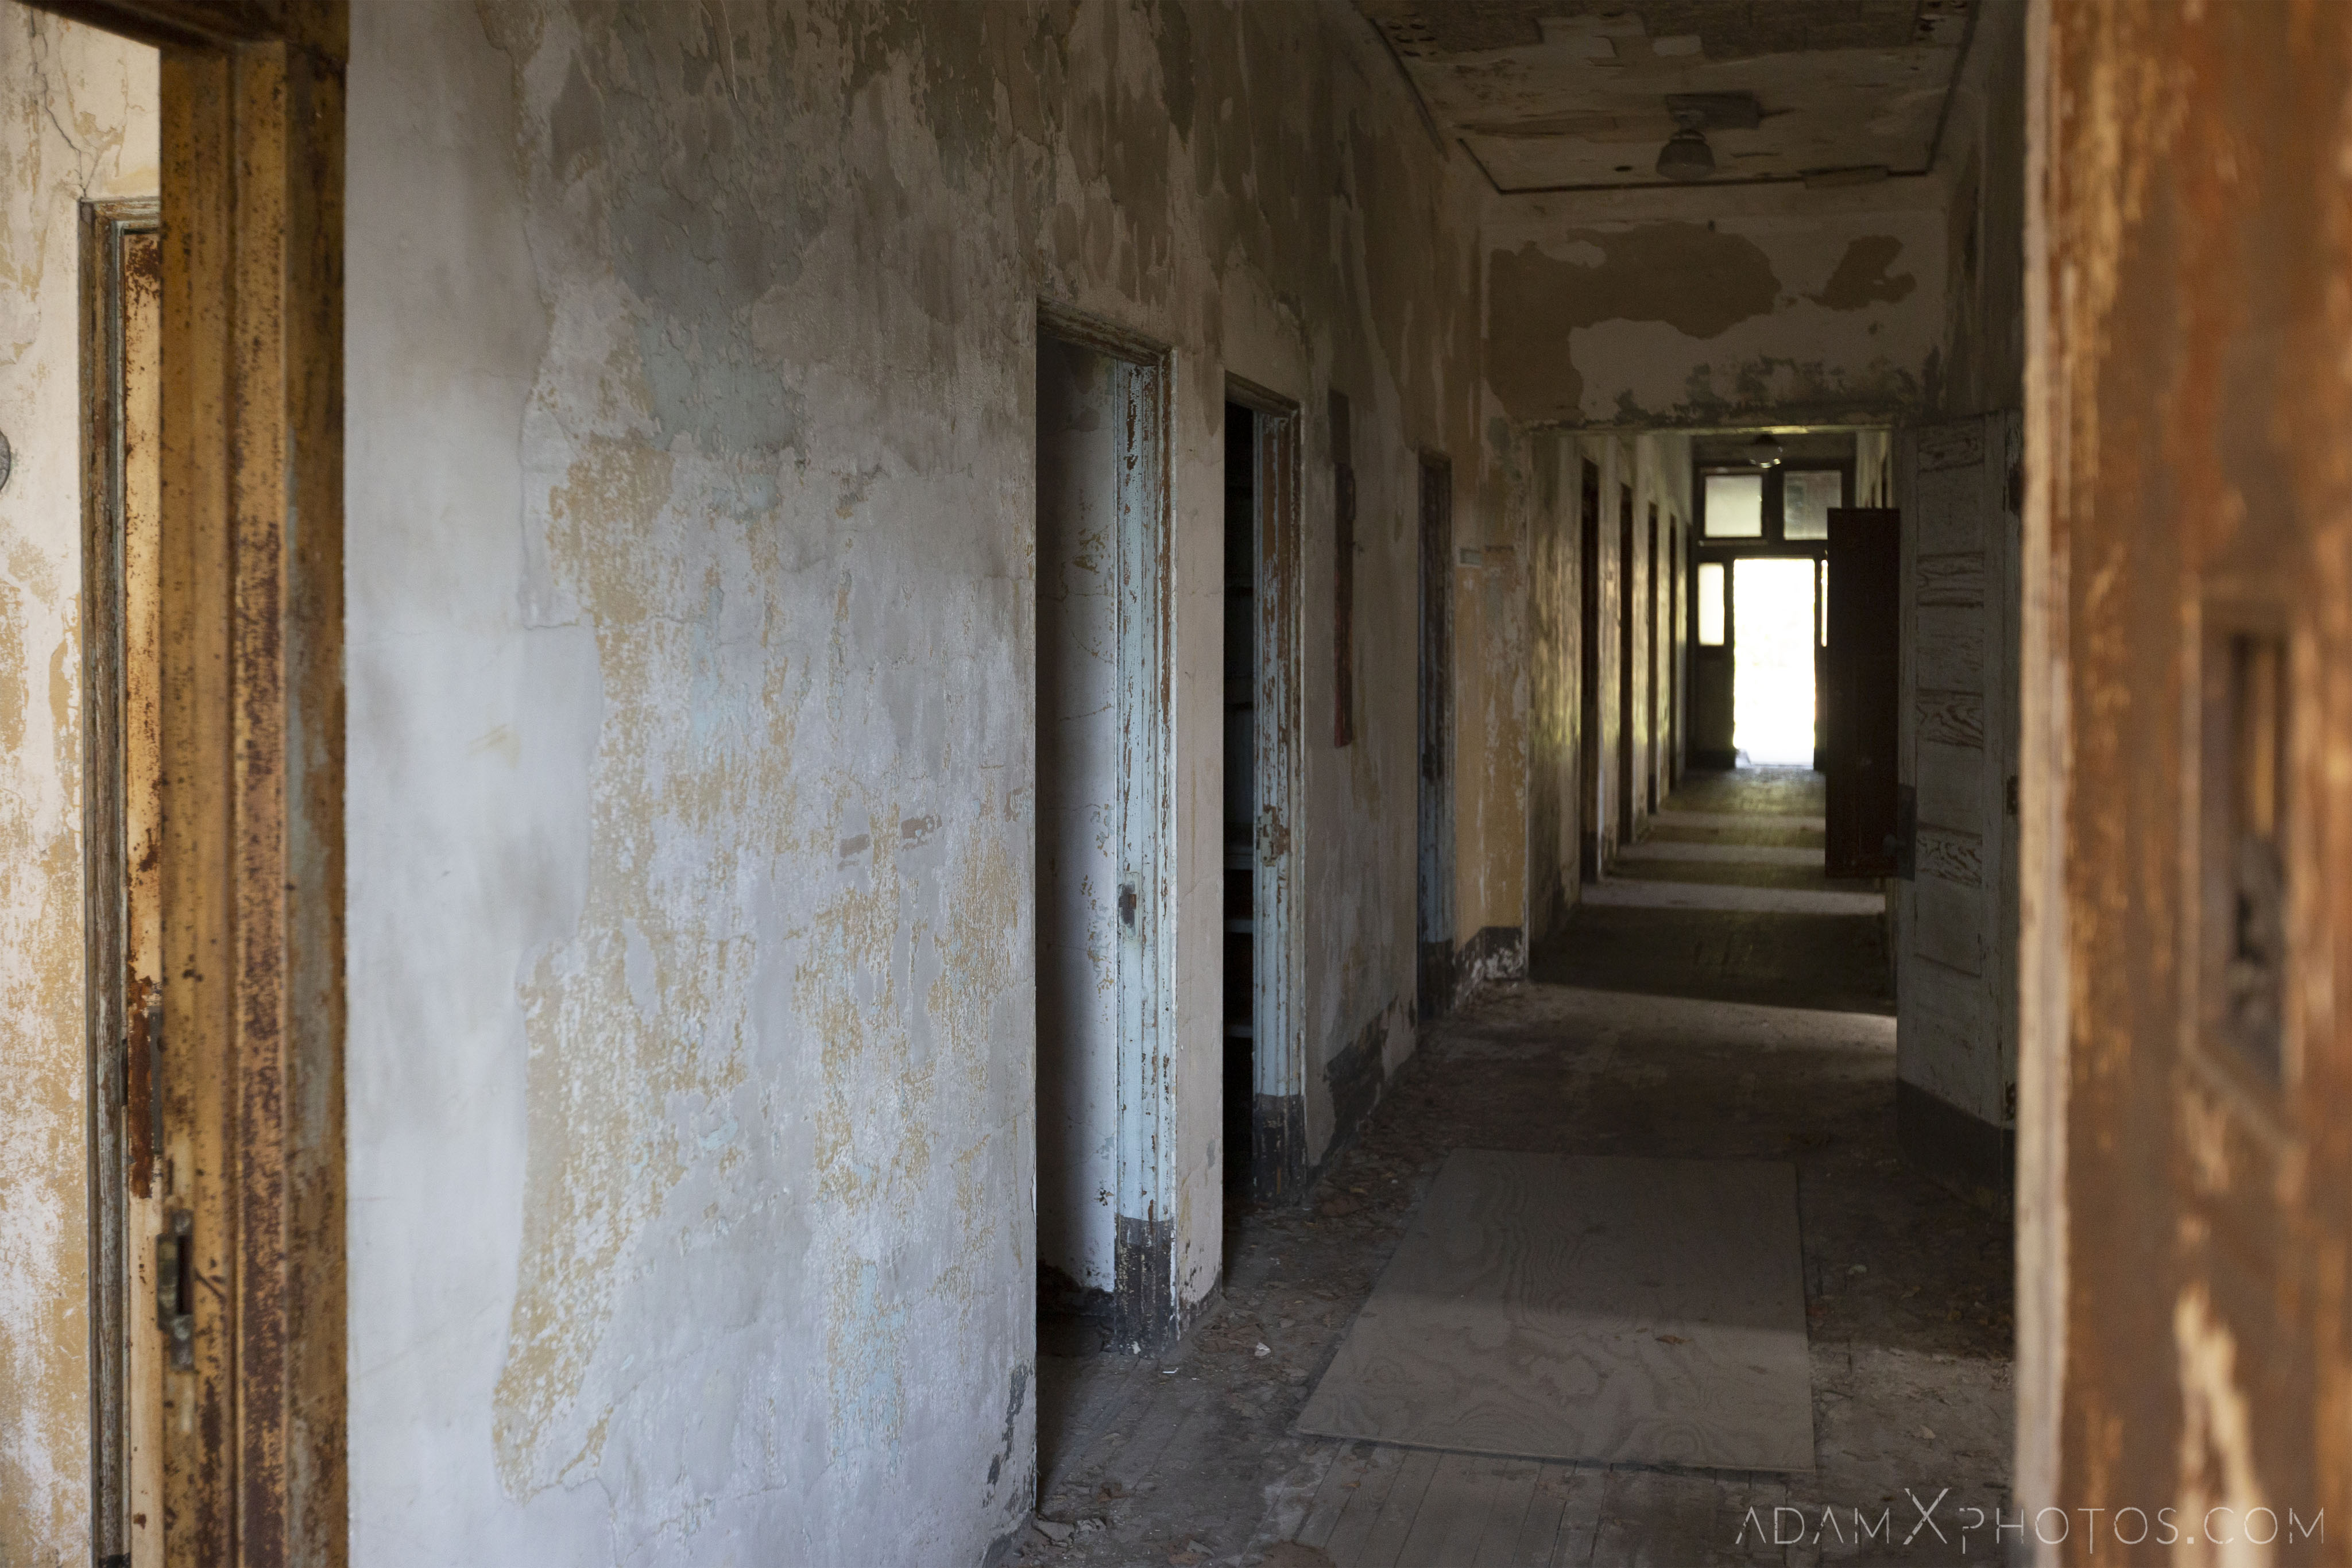 Corridor Ellis Island Immigrant Hospital New York USPHS Hospital #43 Adam X Adamxphotos Urbex Urban Exploration Access 2017 Abandoned decay ruins lost forgotten derelict location creepy haunting eerie